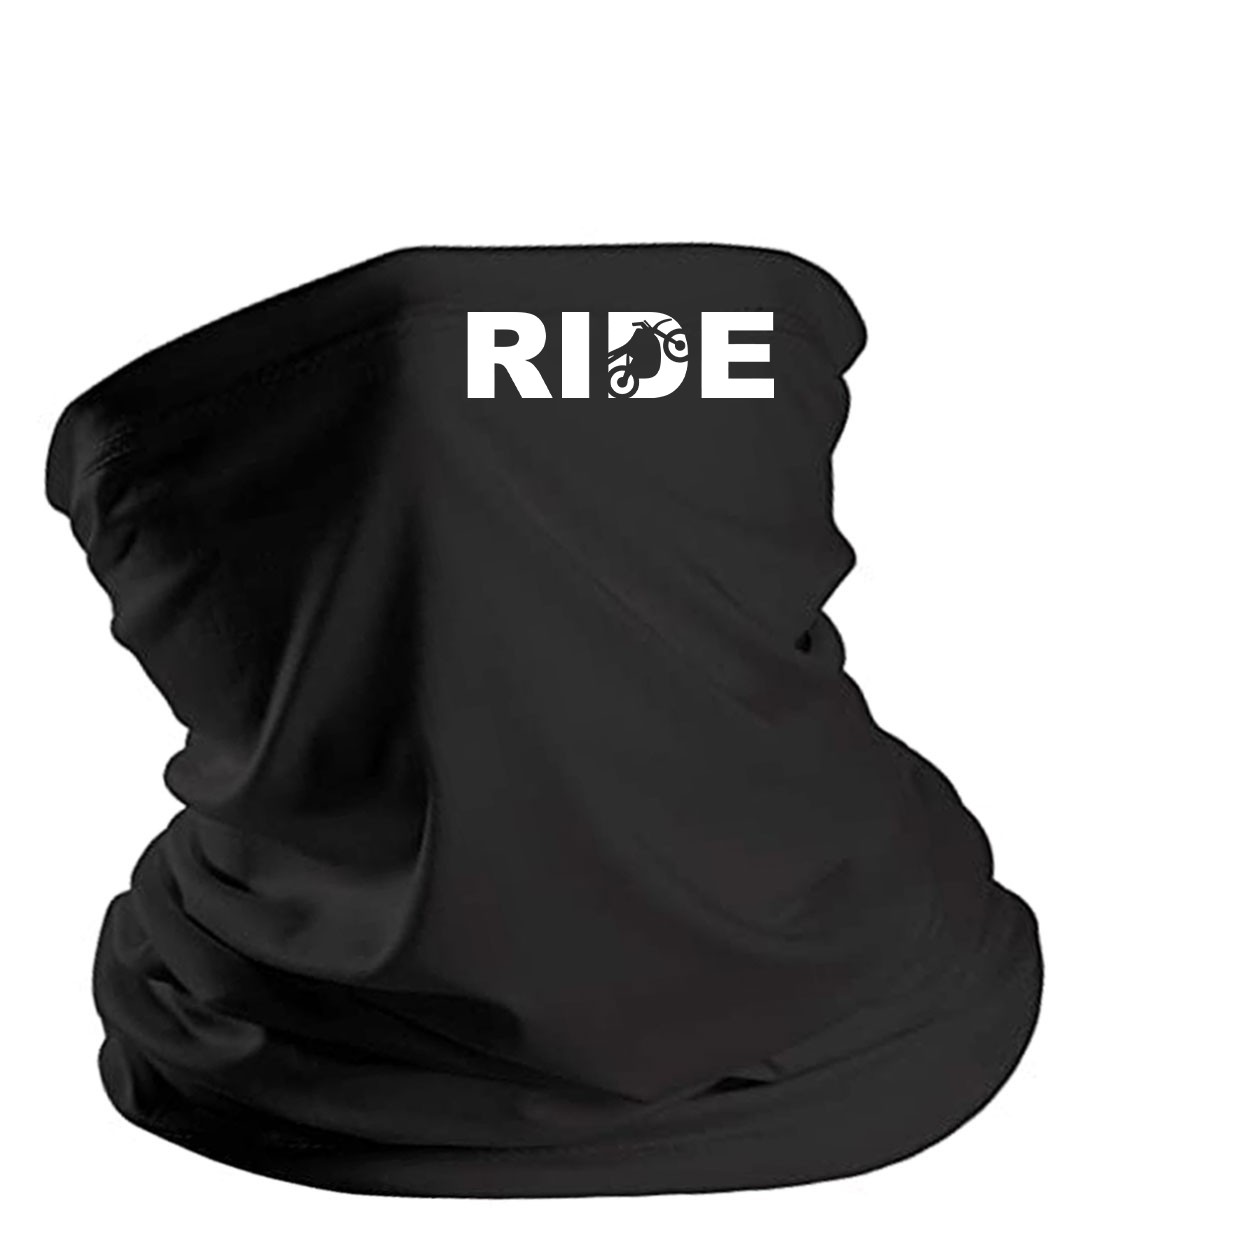 Ride Moto Logo Night Out Lightweight Neck Gaiter Face Mask Black (White Logo)